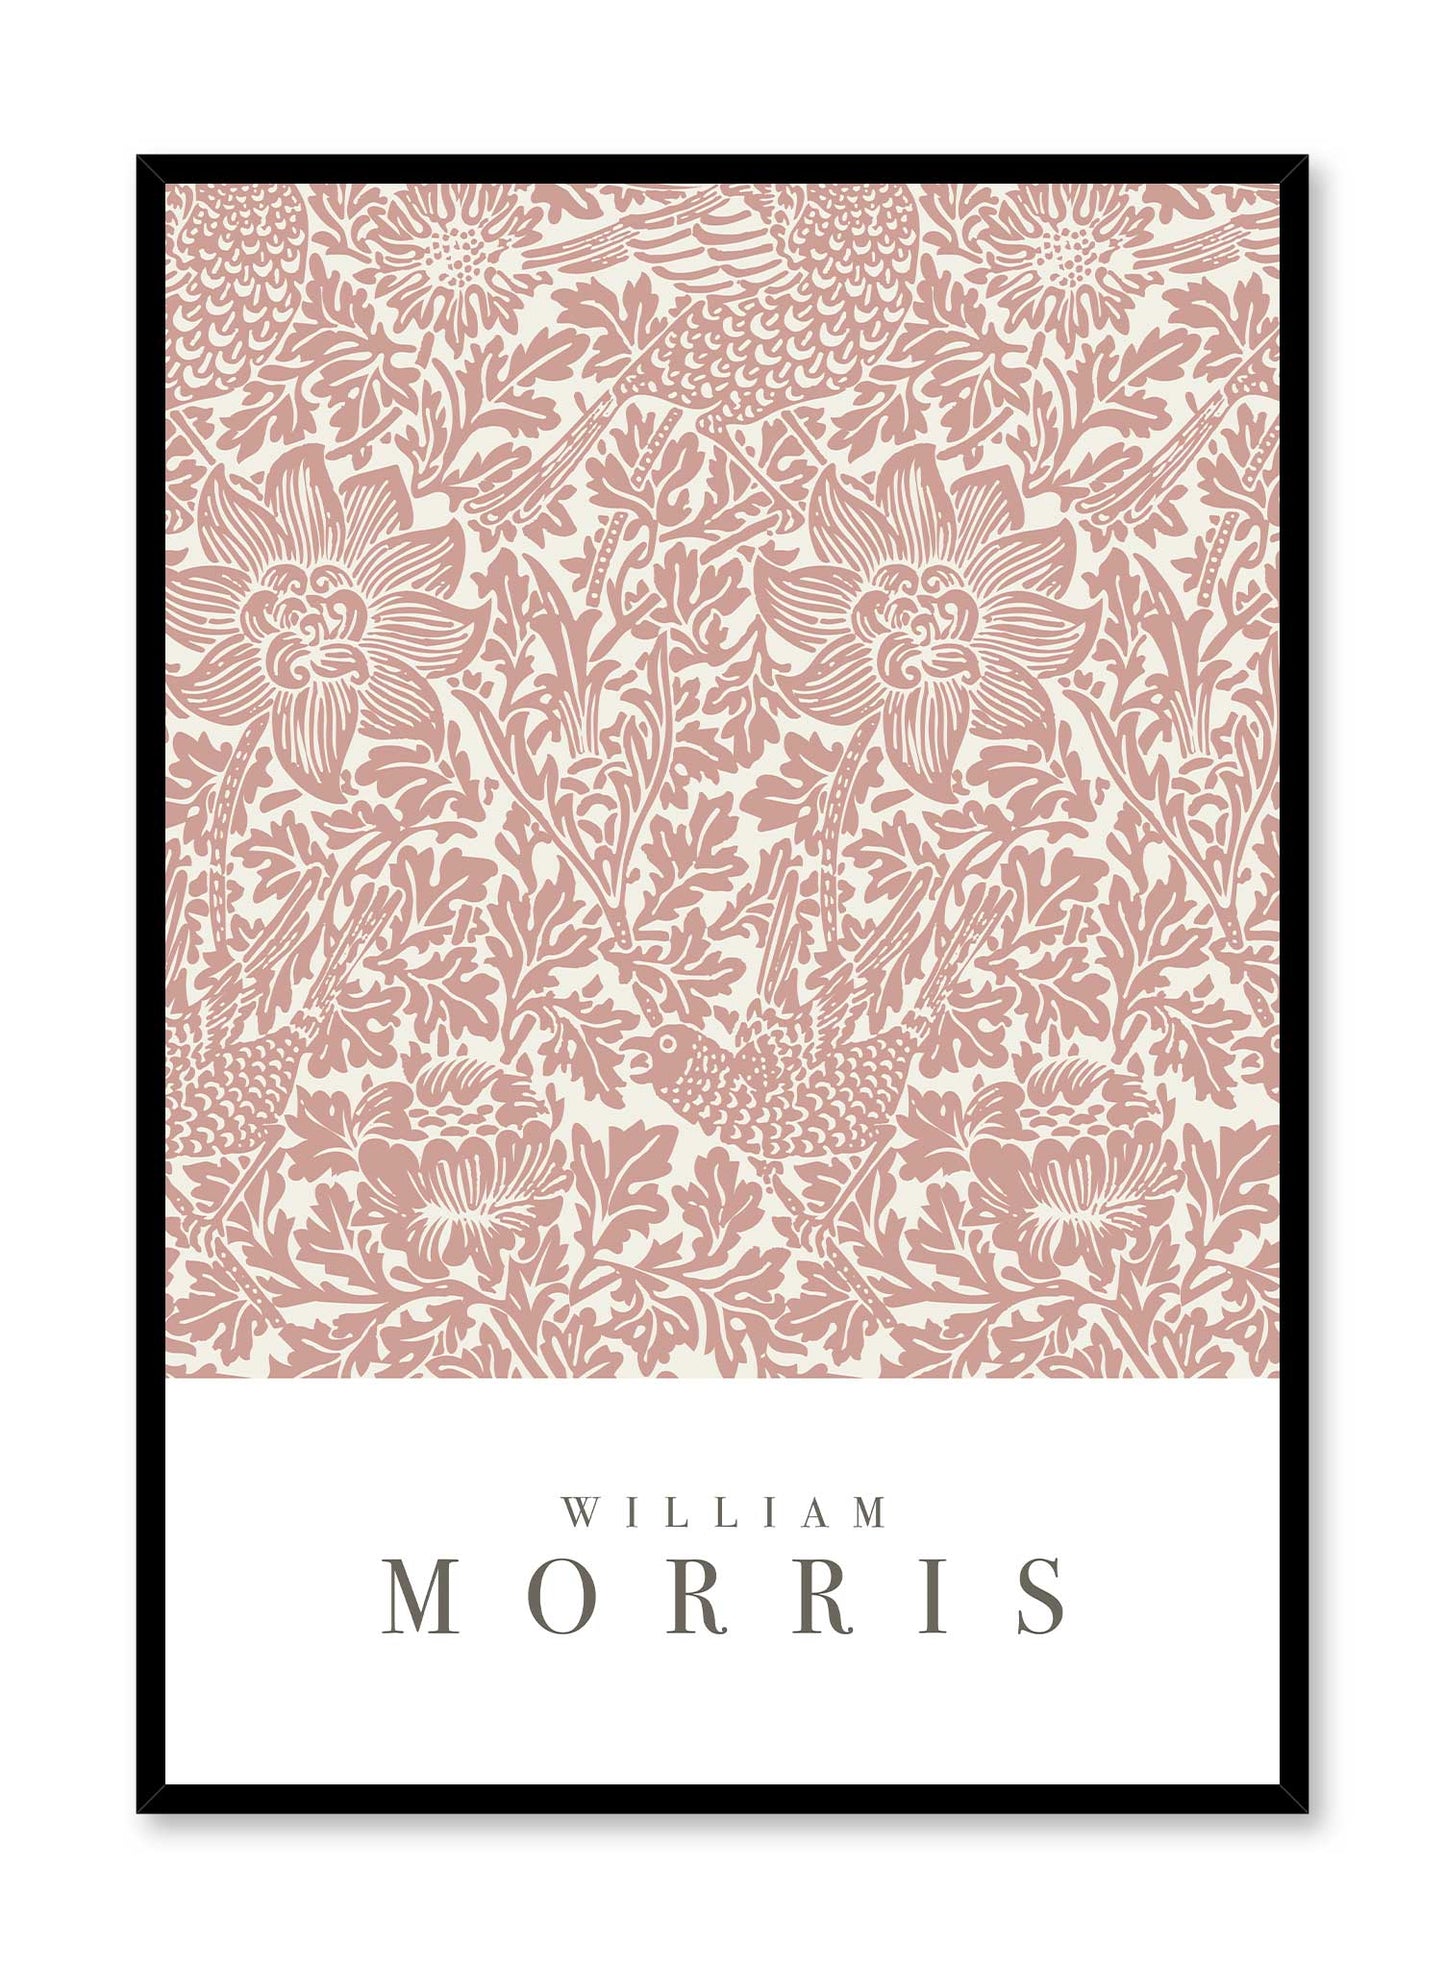 Morris Flowers is a minimalist artwork by Opposite Wall of William Moris' Morris Flowers.